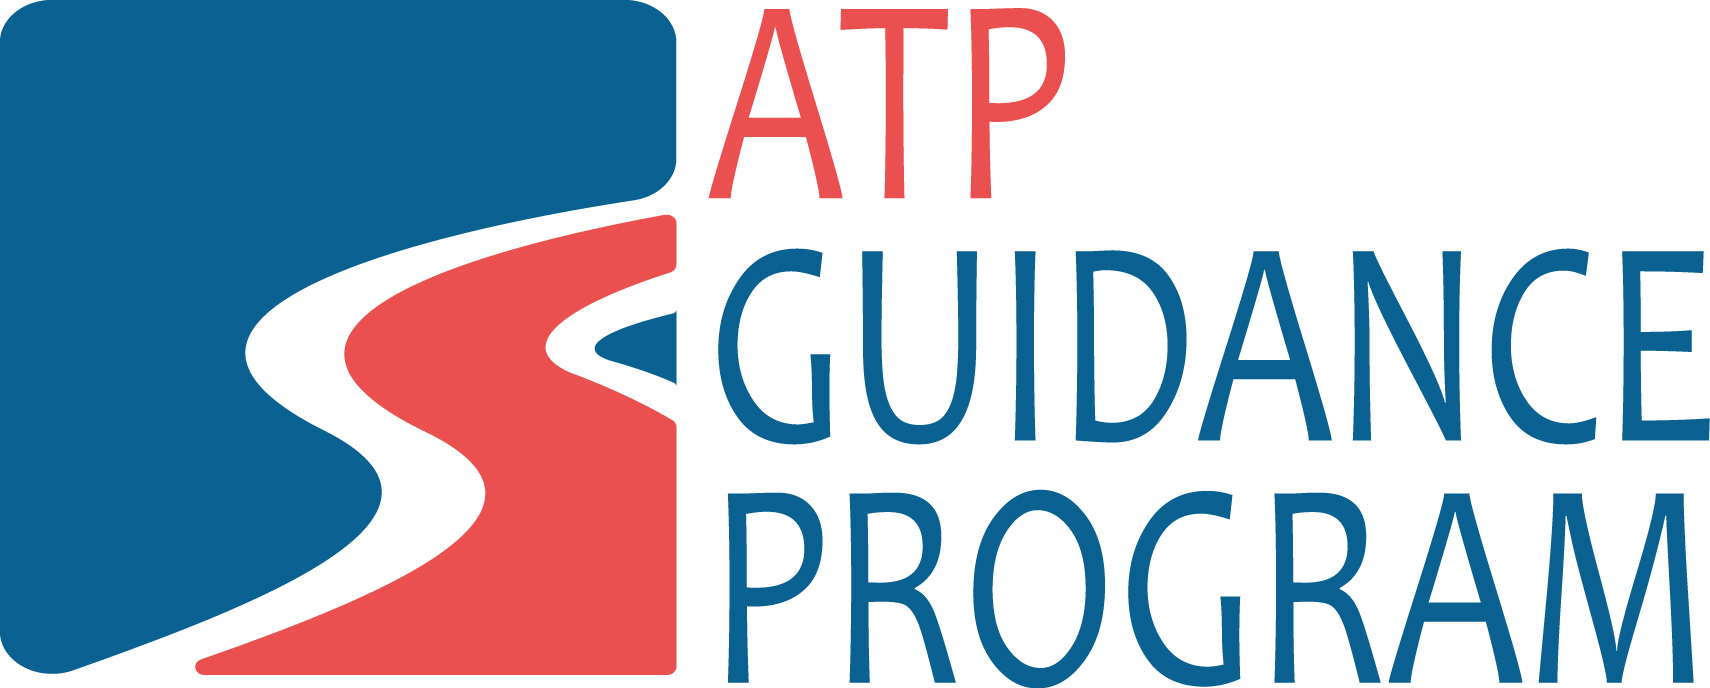 ATP Guidance Program Logo 